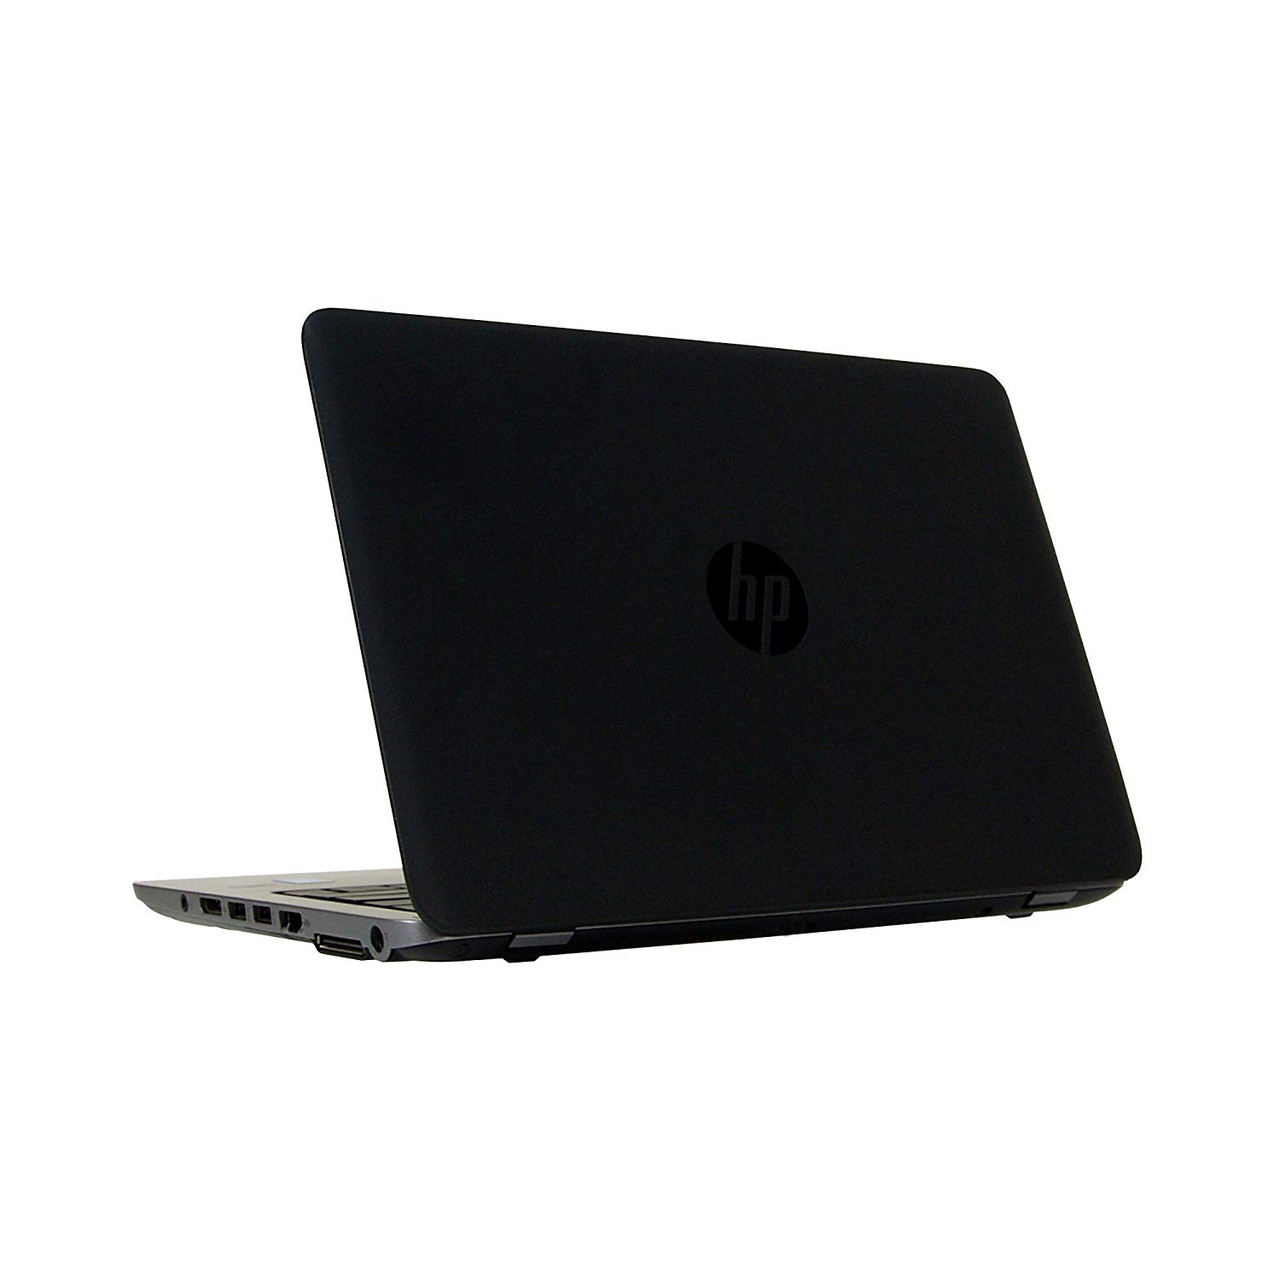 HP Elitebook 820 G1 Laptop Intel Core i5 1.90 GHz 4Gb Ram 180GB SSD W10P | Refurbished